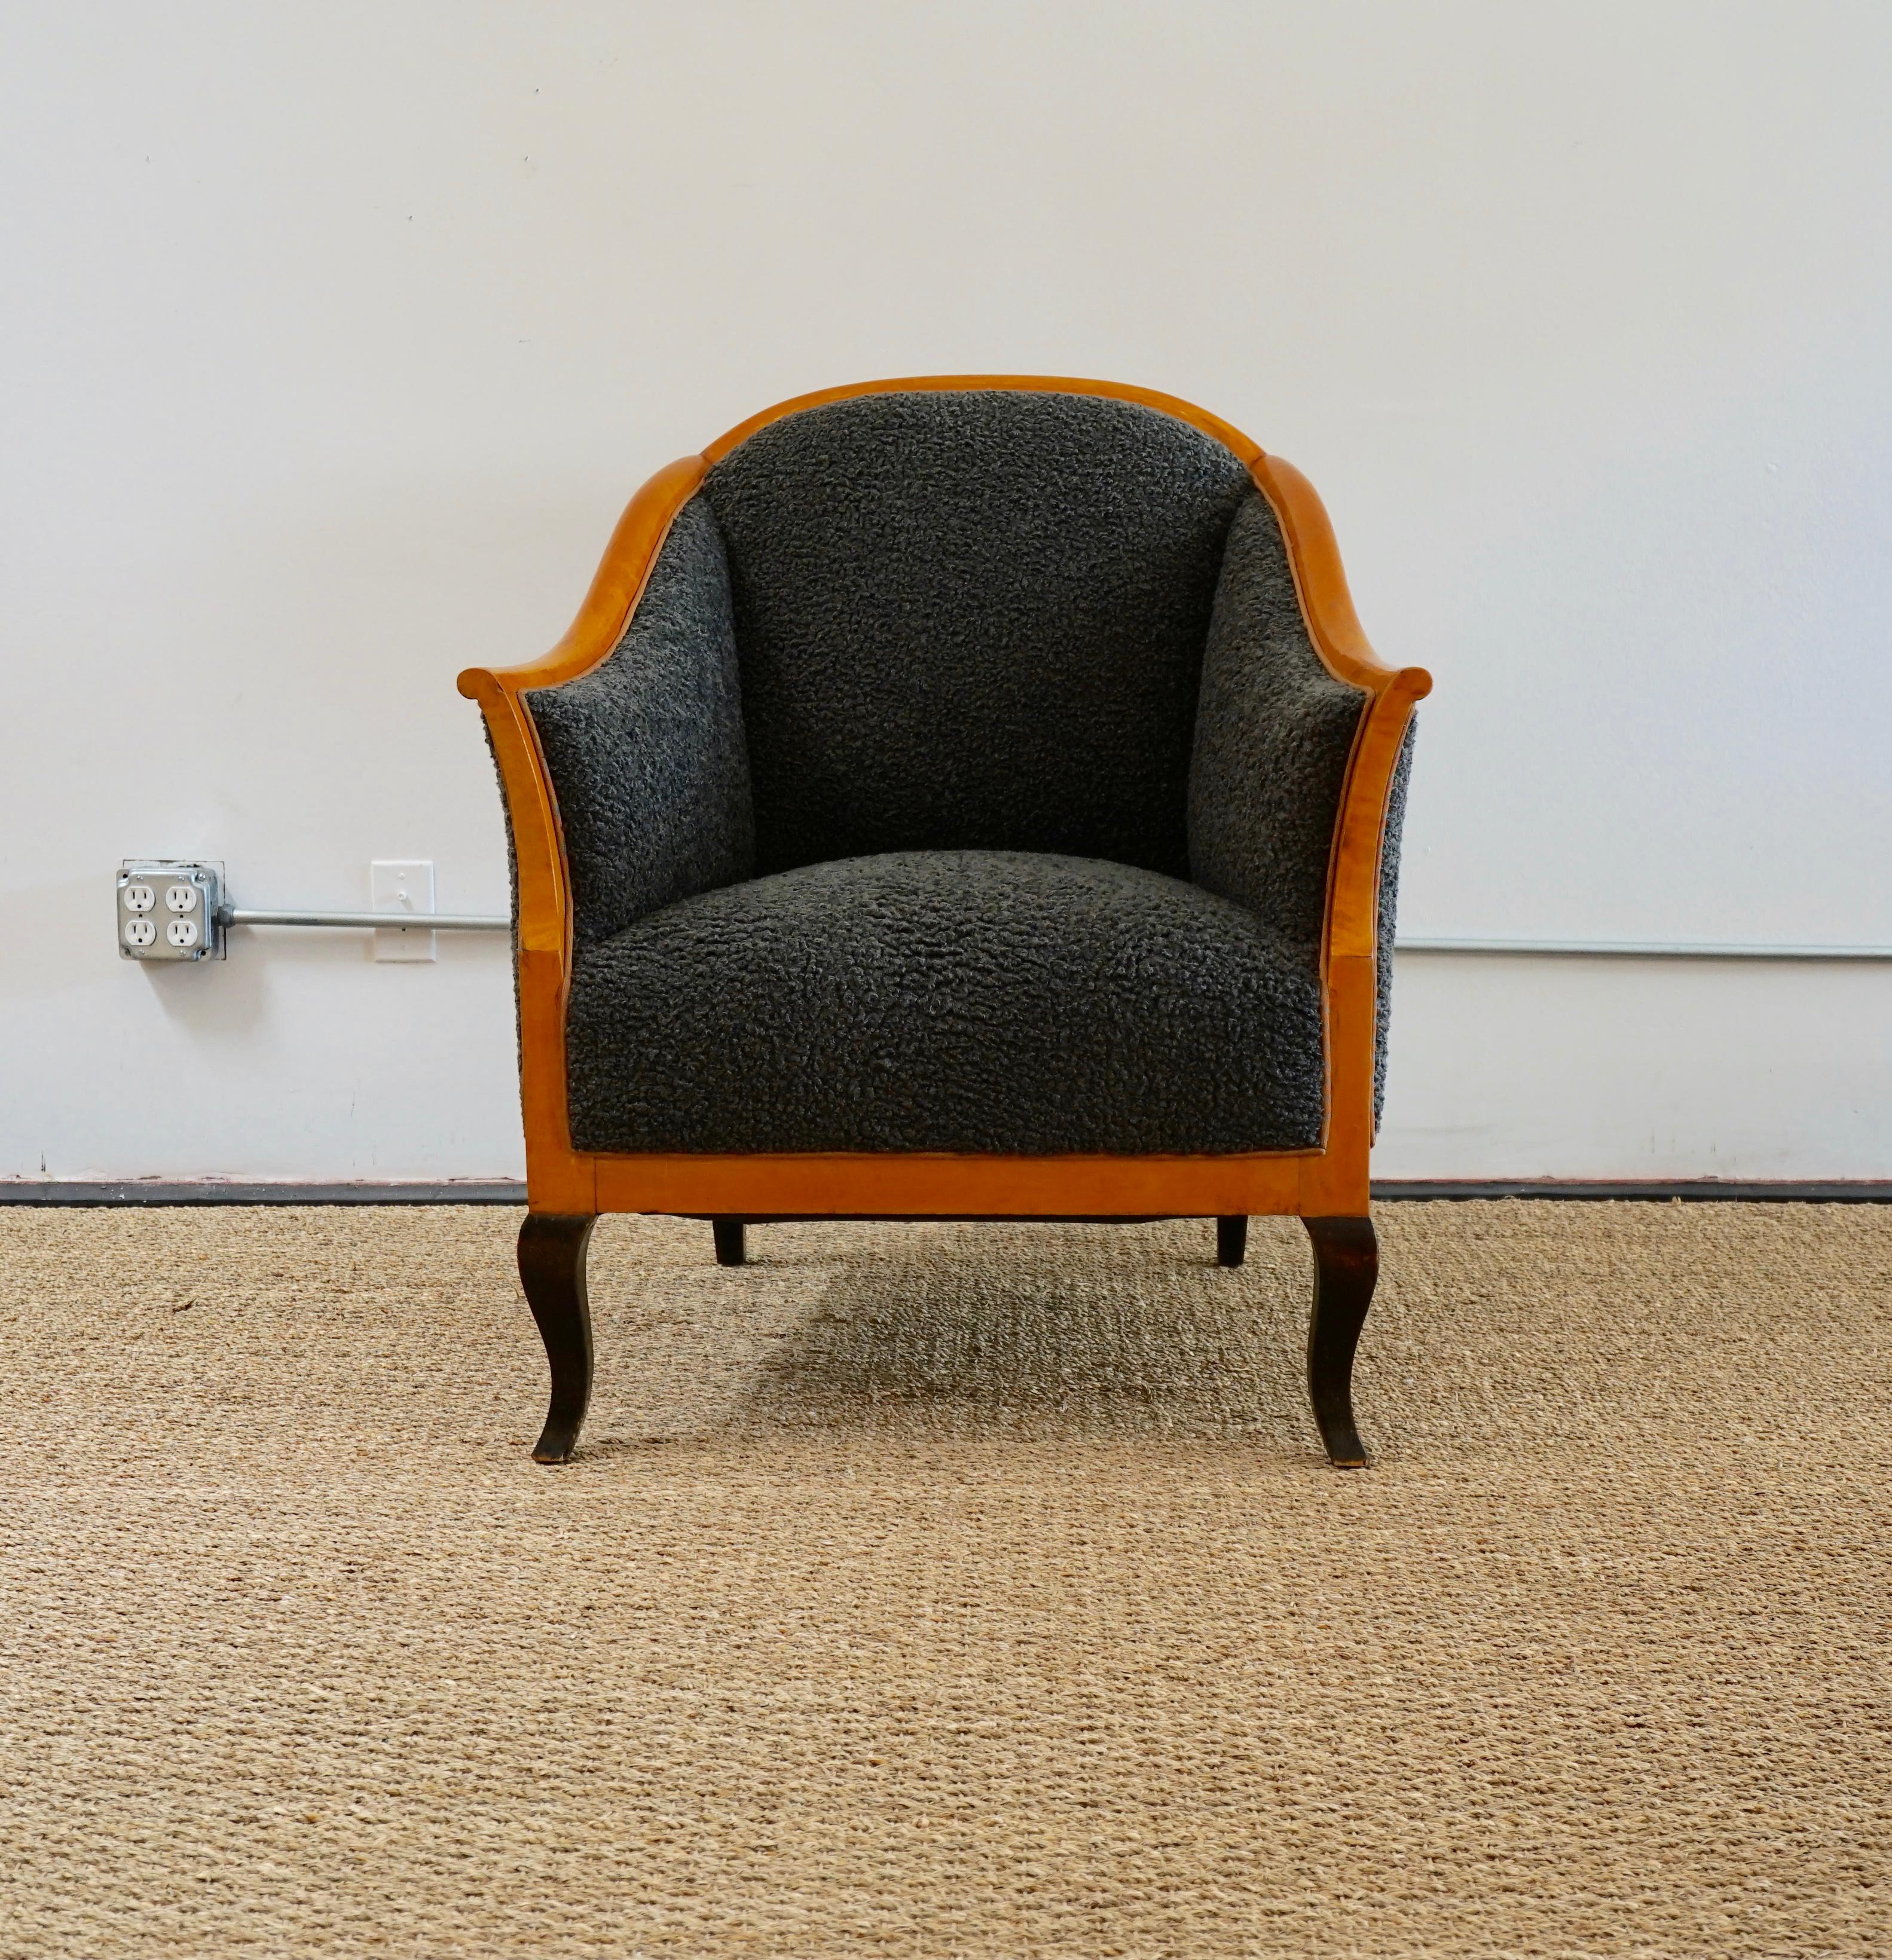 Biedermeier revival limited edition faux shearling club chairs from Martin & Brockett.